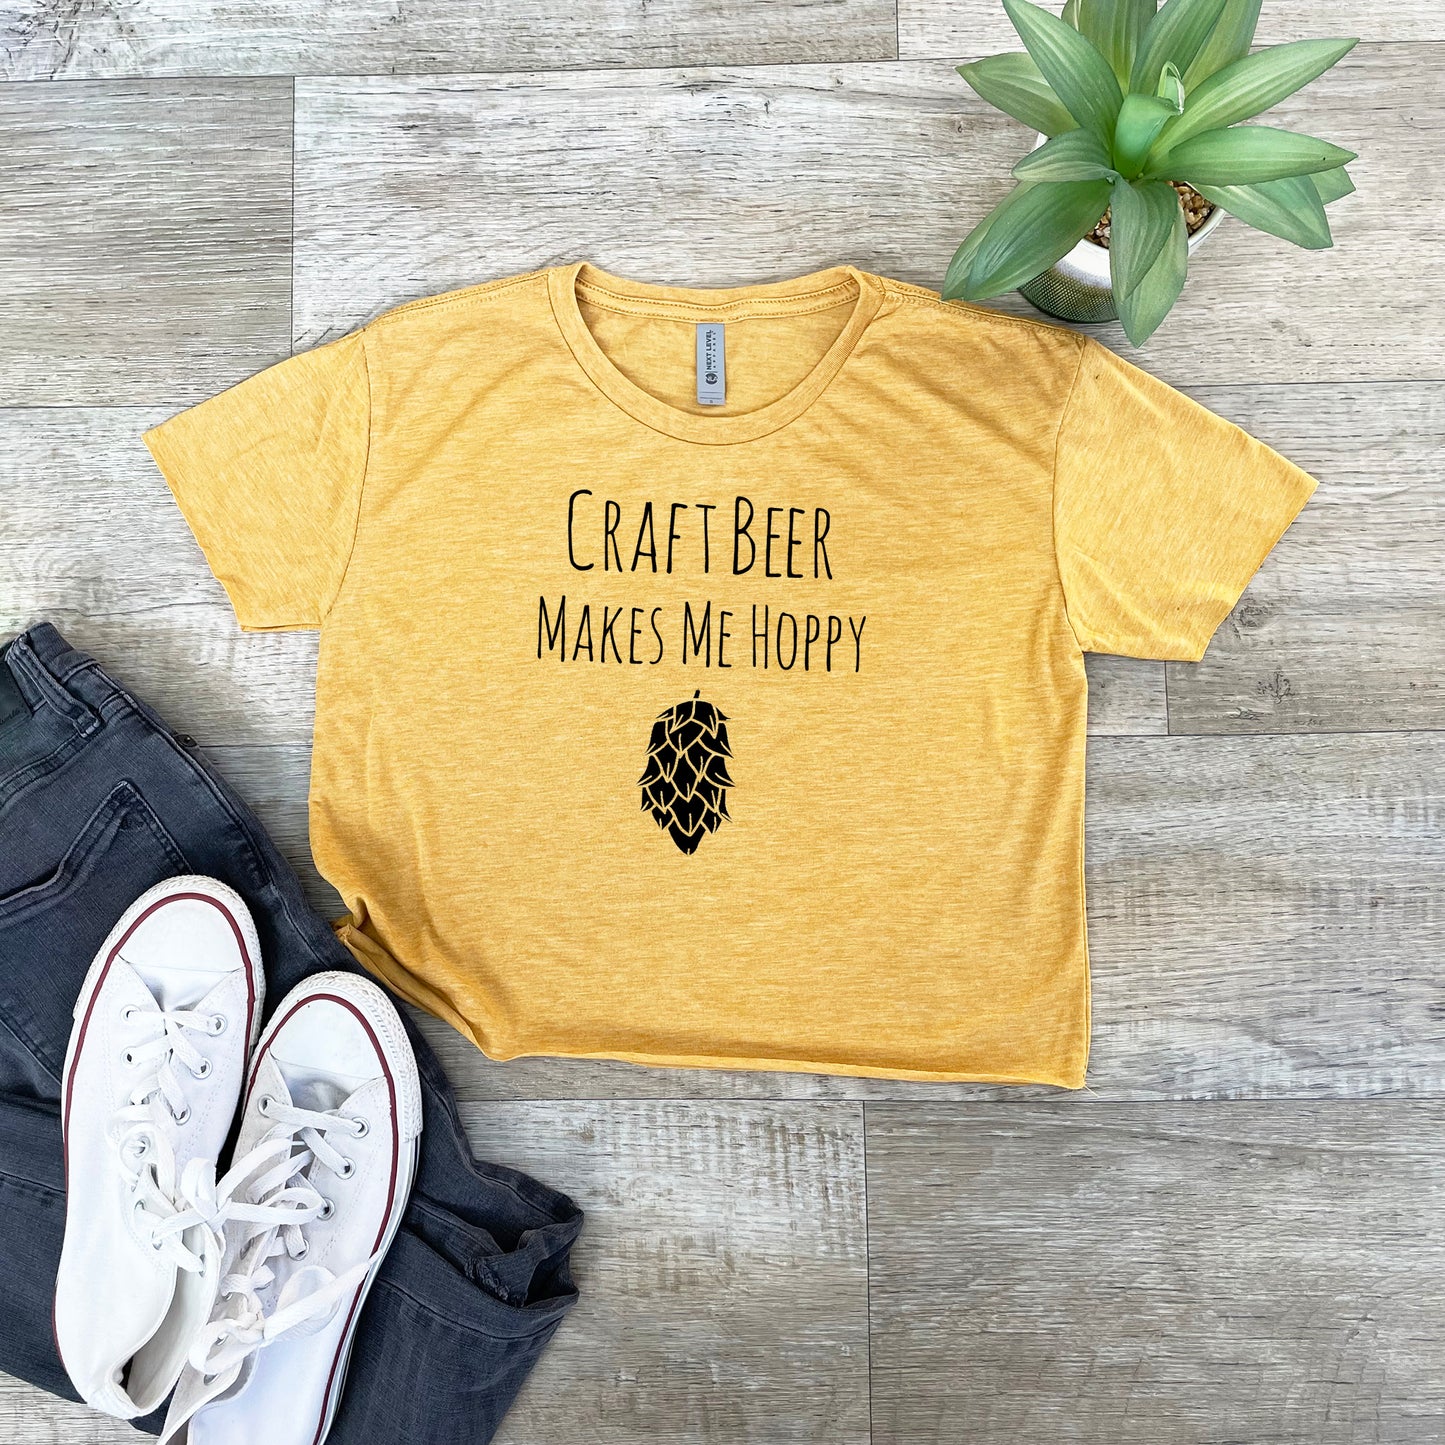 Craft Beer Makes Me Hoppy - Women's Crop Tee - Heather Gray or Gold